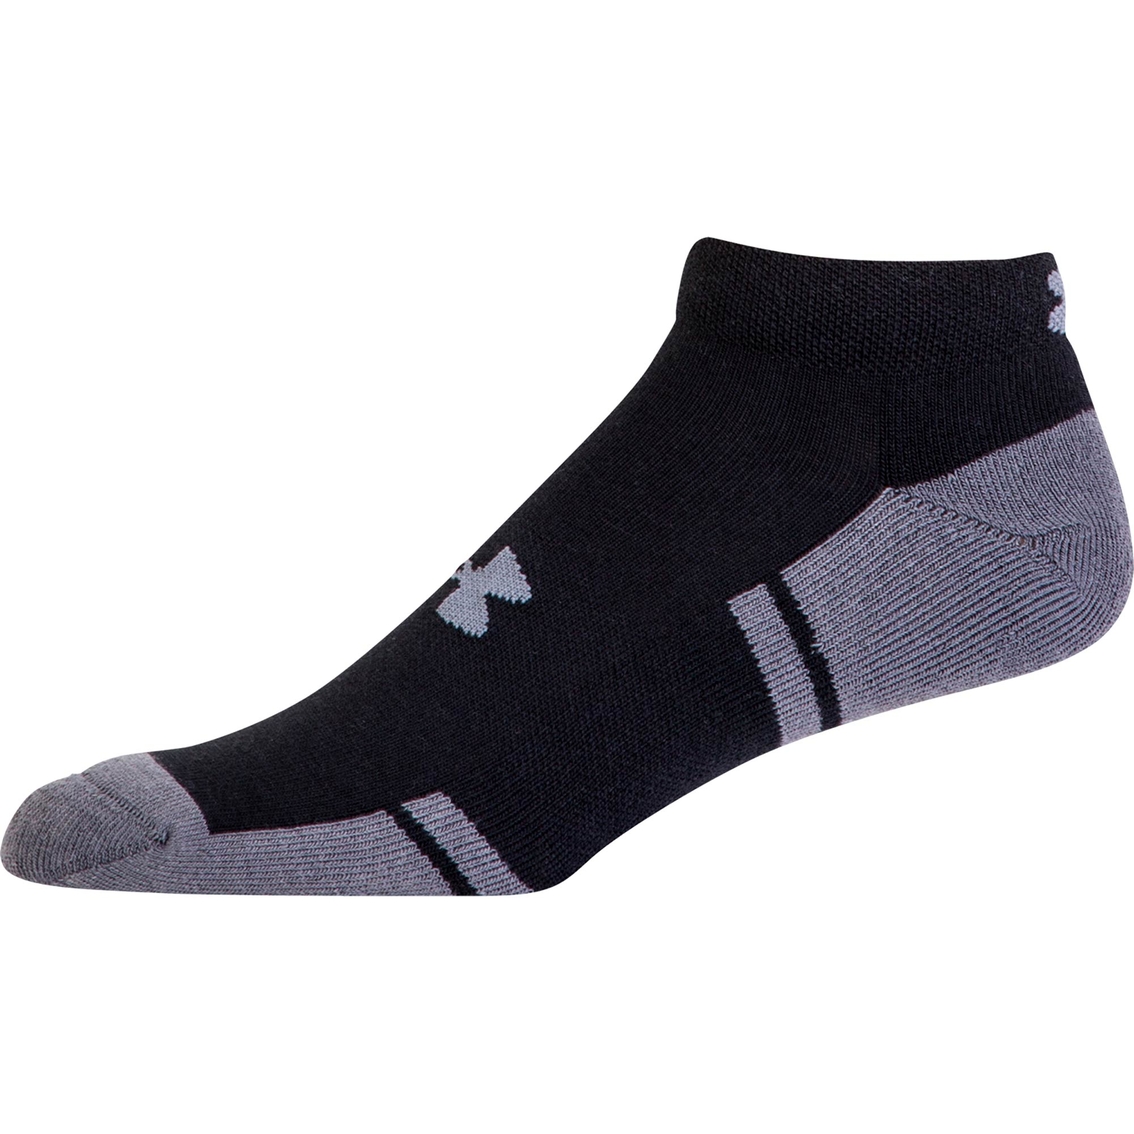 Under Armour Resistor Low Cut Athletic Socks 6 Pk. | Socks | Clothing ...